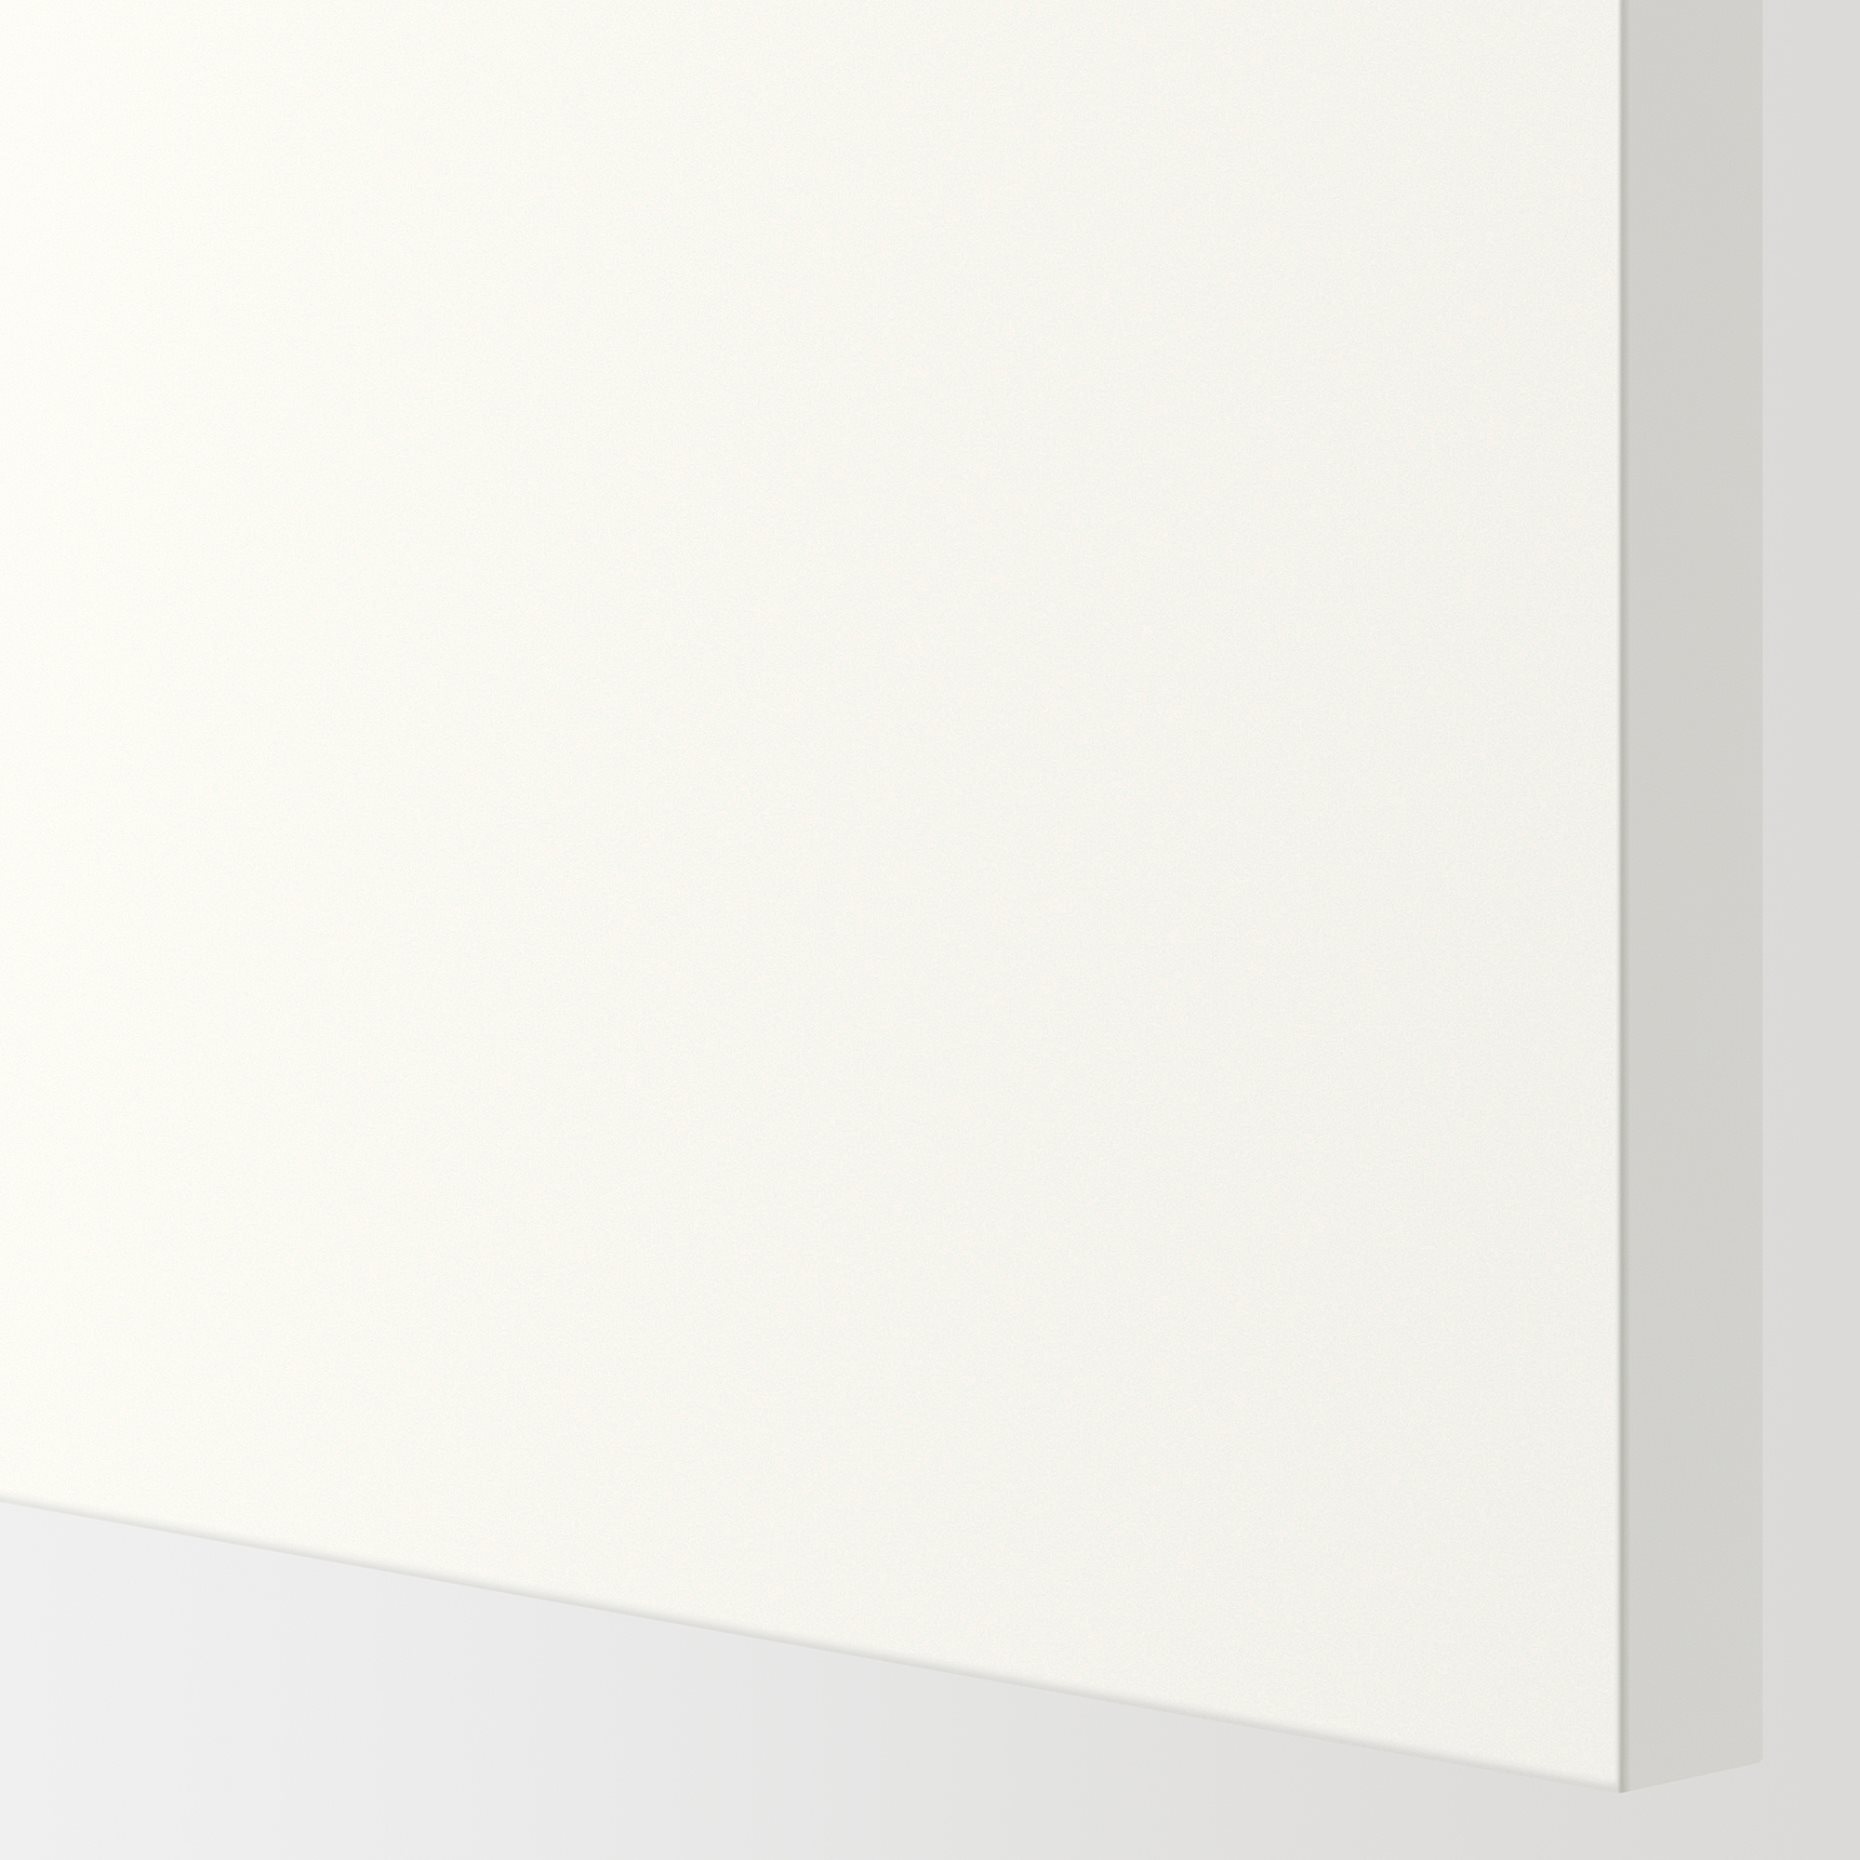 METOD, corner wall cabinet with carousel, 68x60 cm, 795.073.98